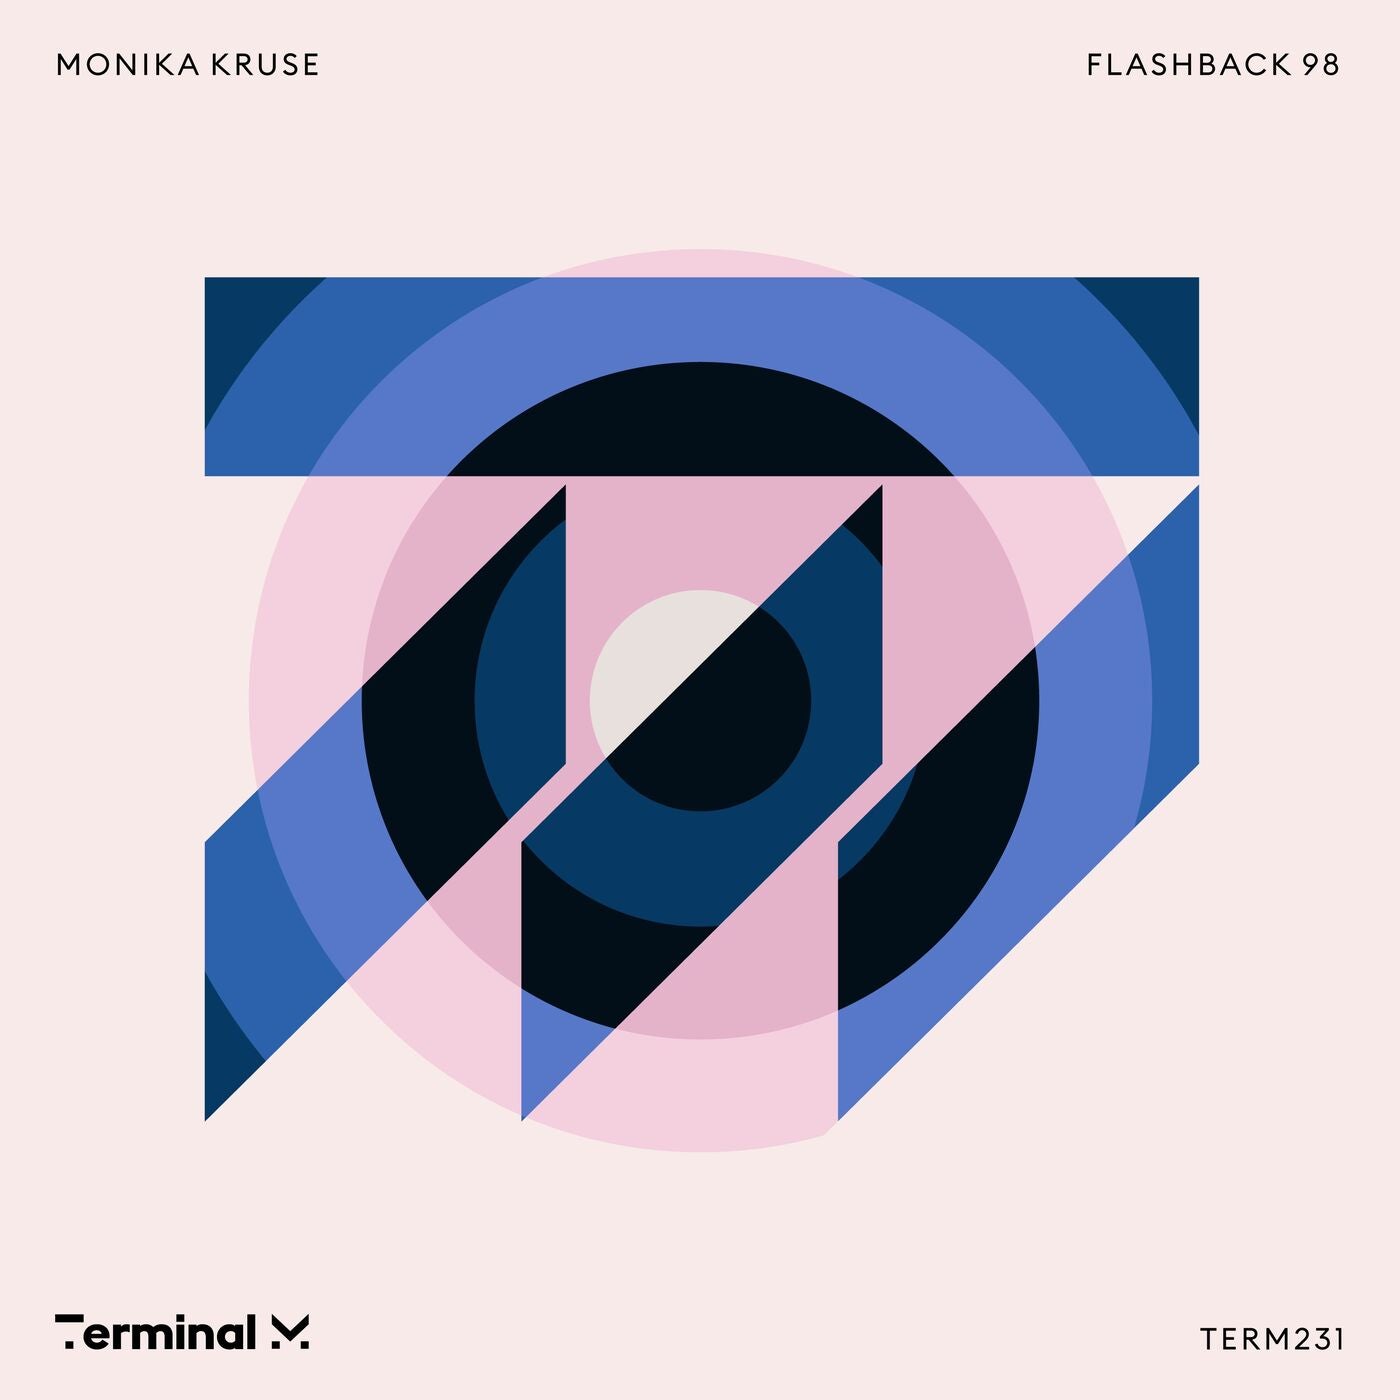 image cover: Monika Kruse - Flashback 98 on Terminal M